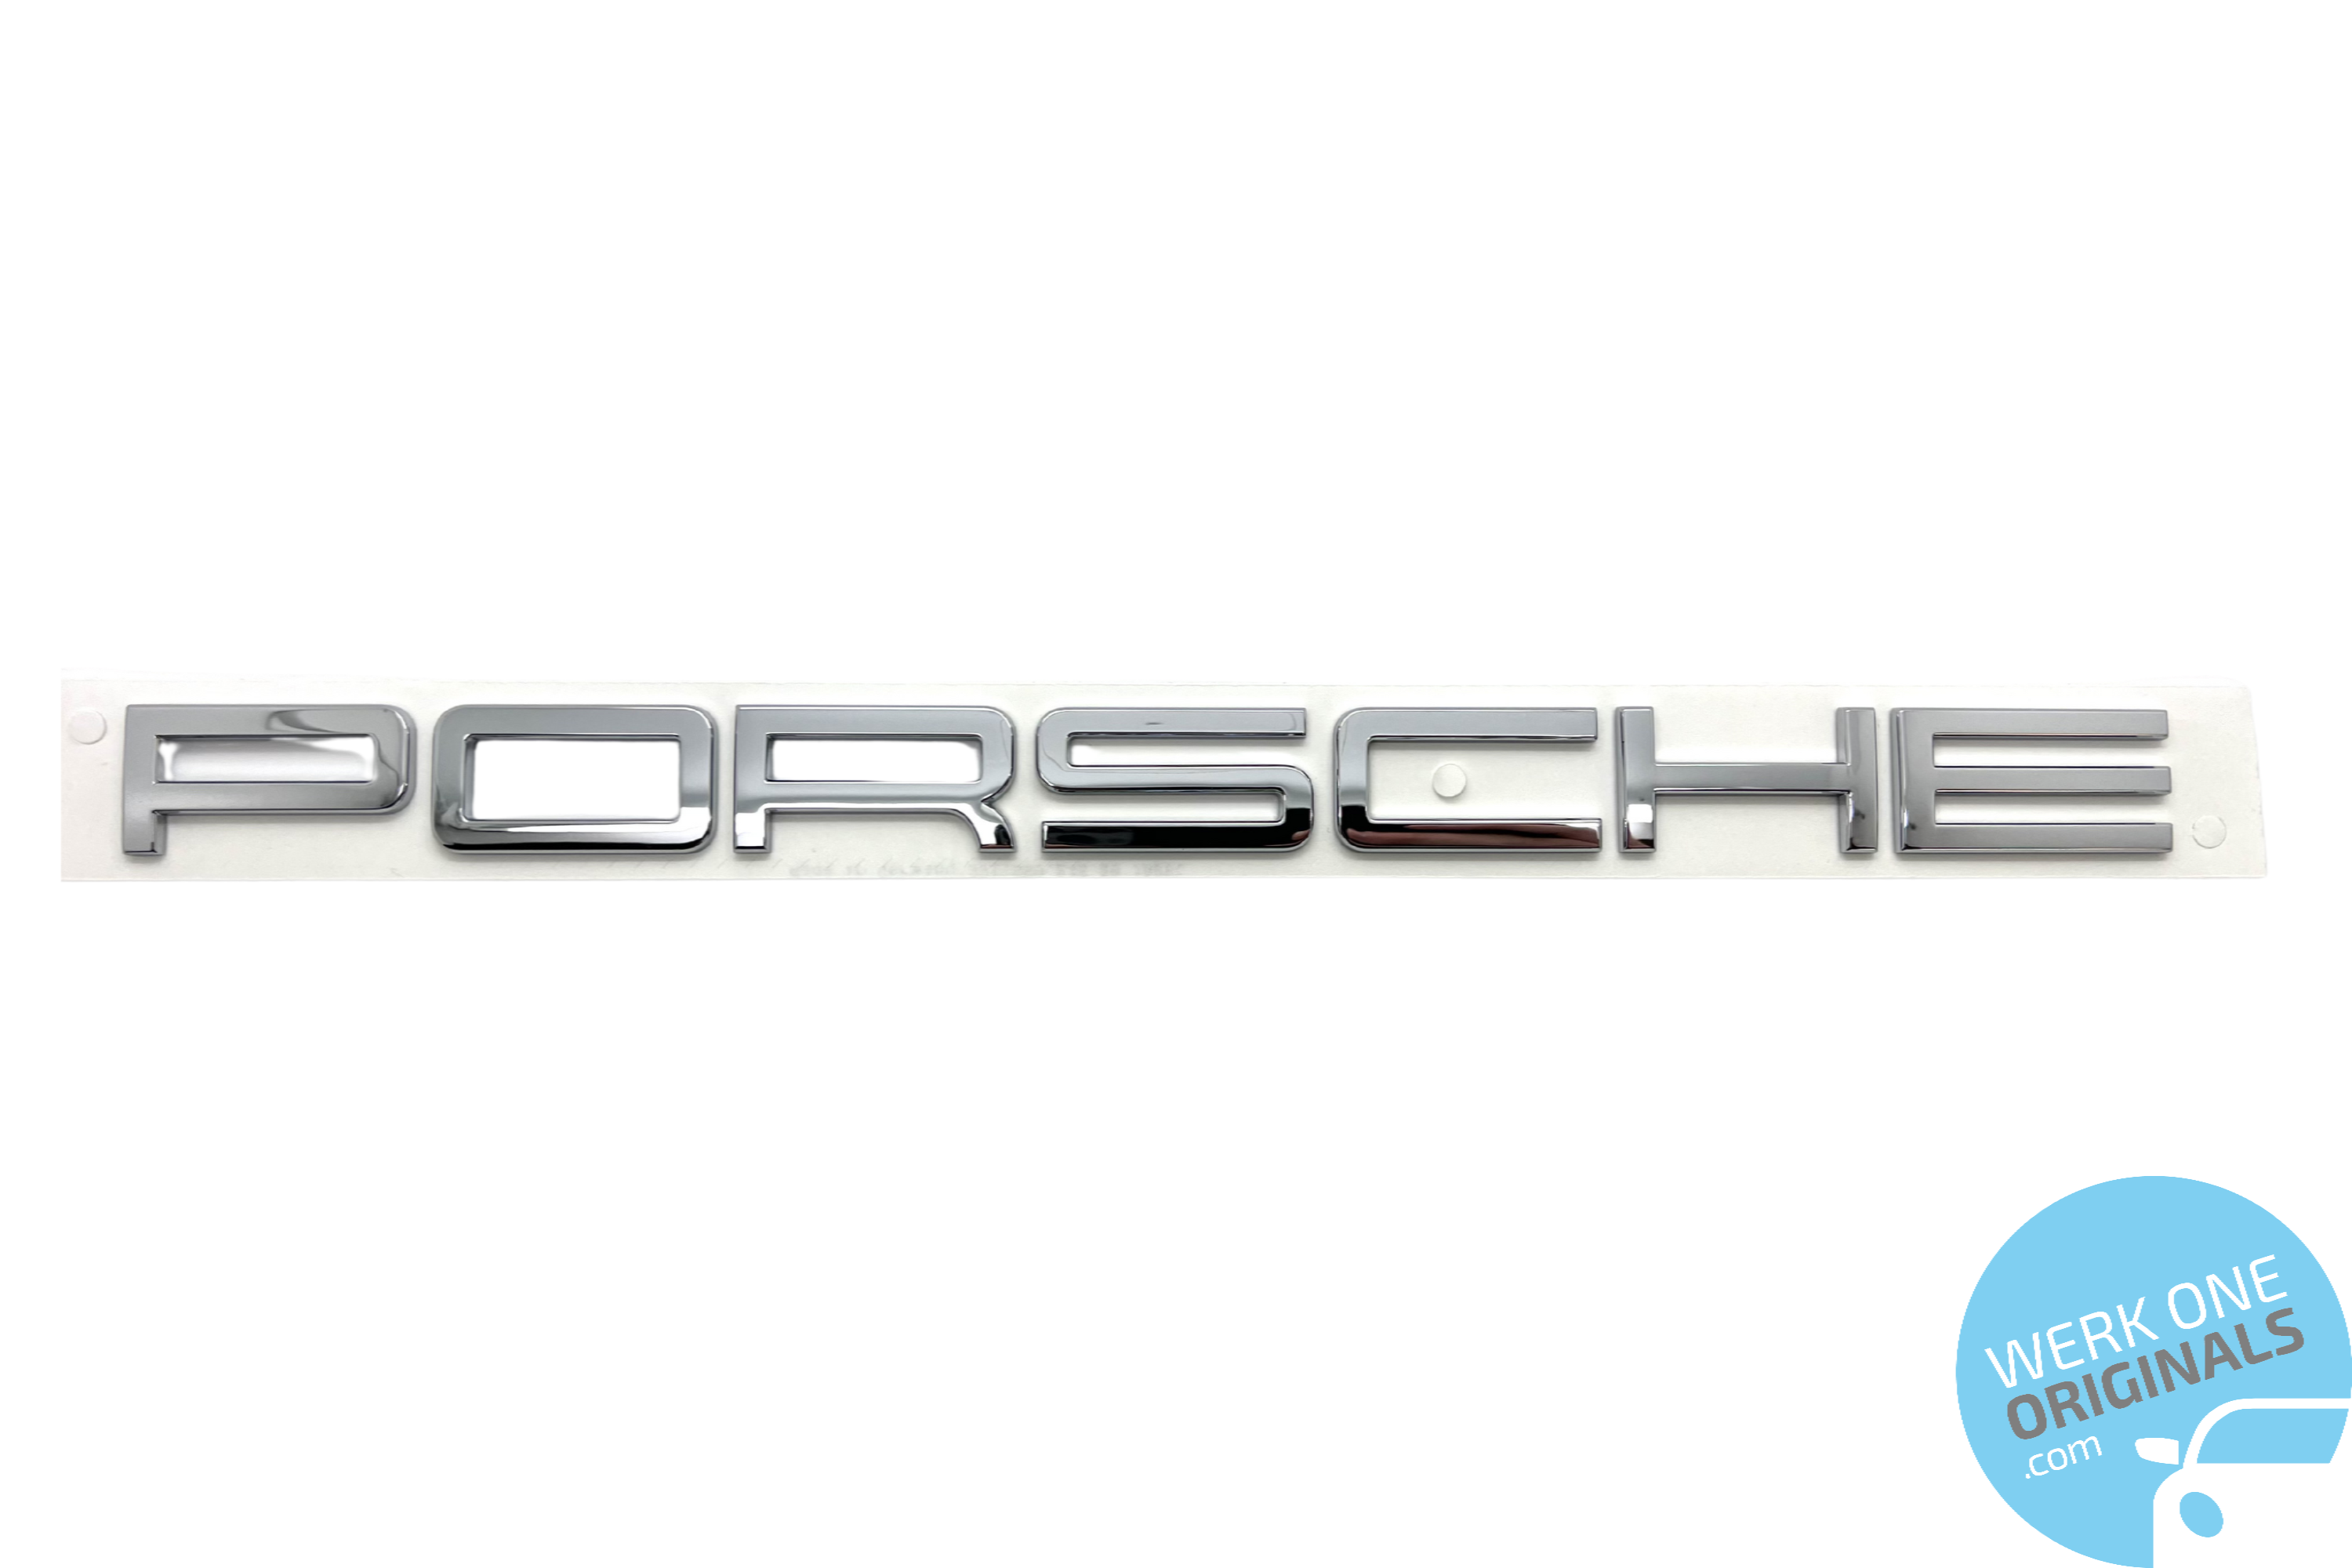 Porsche Official 'Porsche 911 Carrera S' Rear Badge Decal in Chrome Silver for 911 Type 991 Carrera S Models